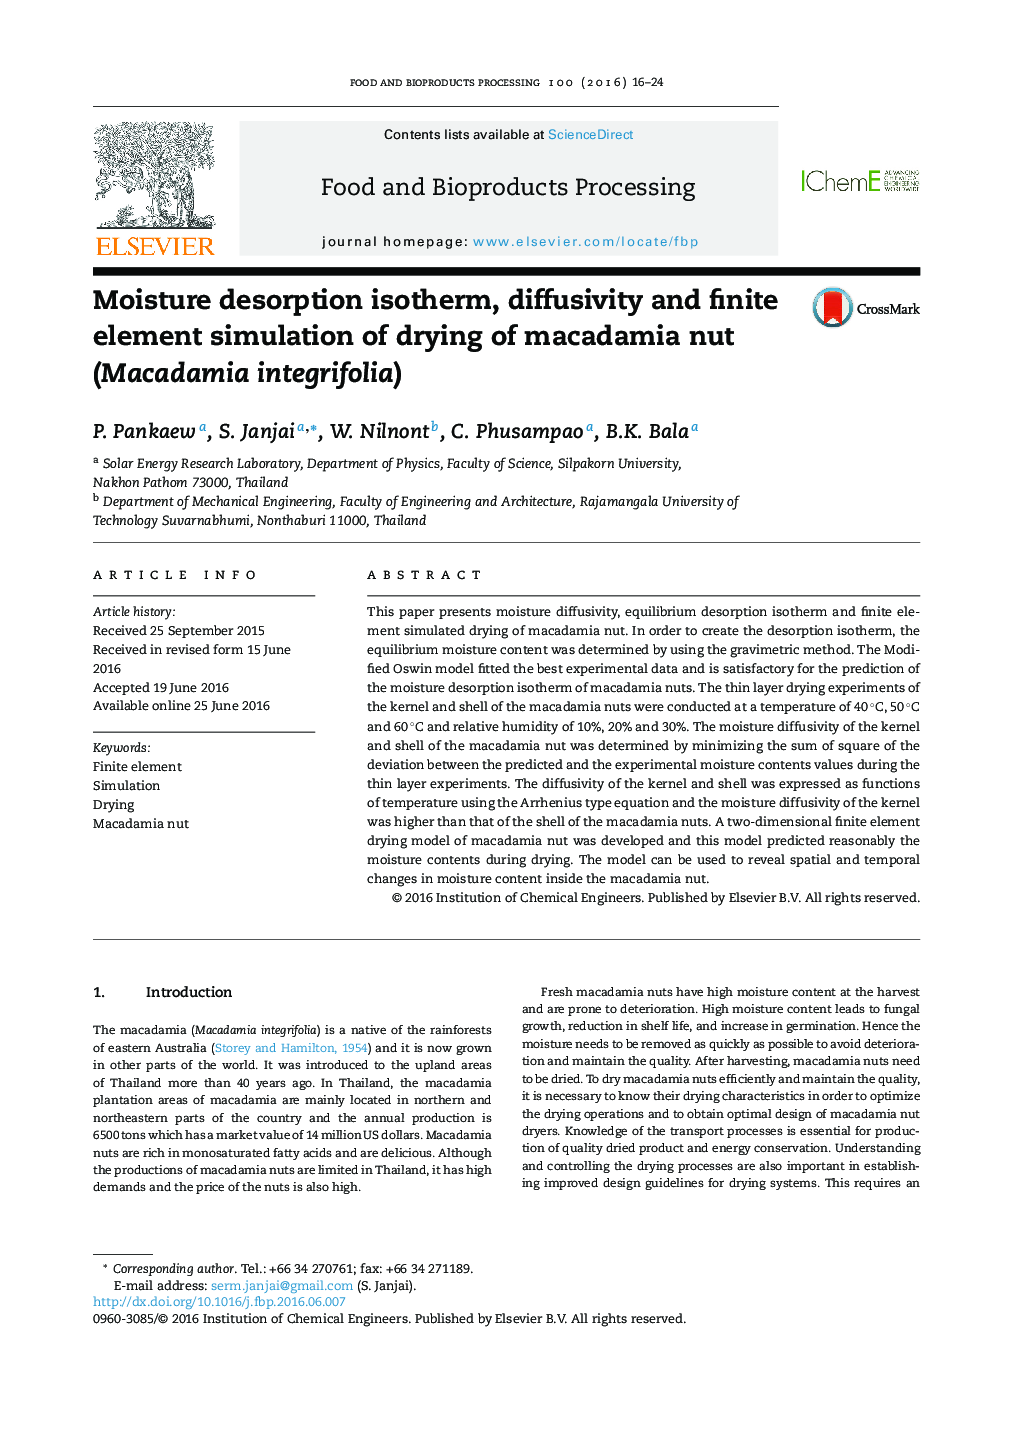 Moisture desorption isotherm, diffusivity and finite element simulation of drying of macadamia nut (Macadamia integrifolia)